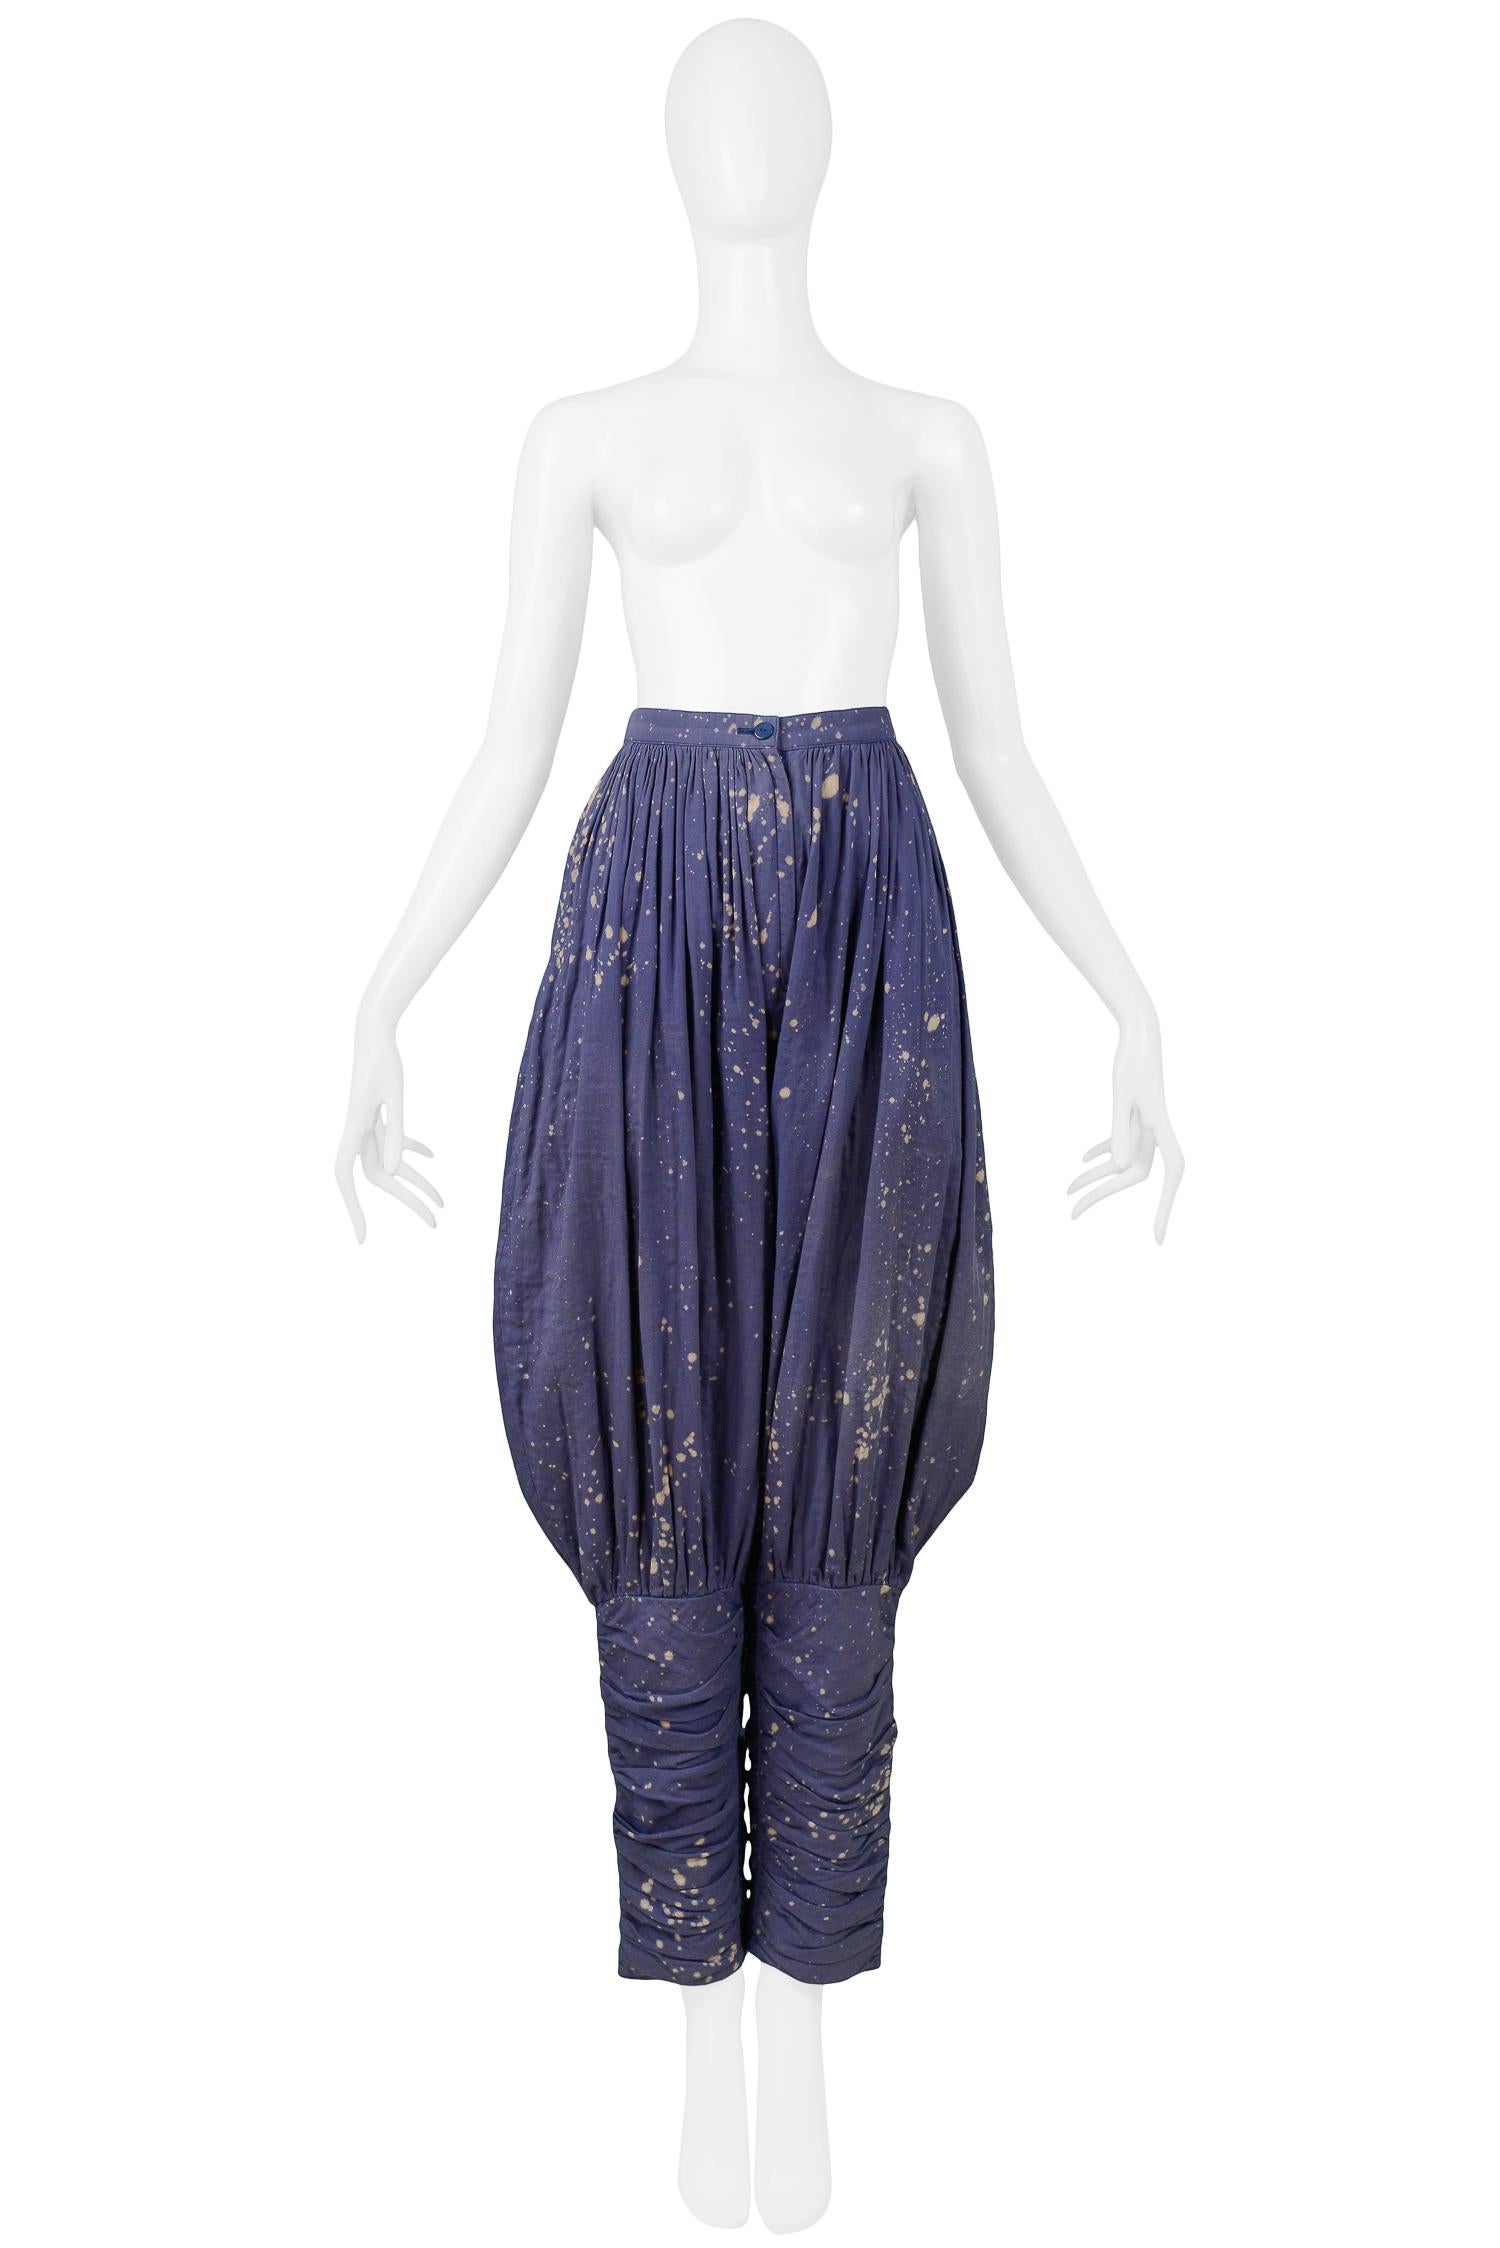 Vintage Issey Miyake indigo blue jodhpur pants featuring bleach splatter detail and gathering throughout.

Excellent Condition.

Size 2

Measurements
Waist 26